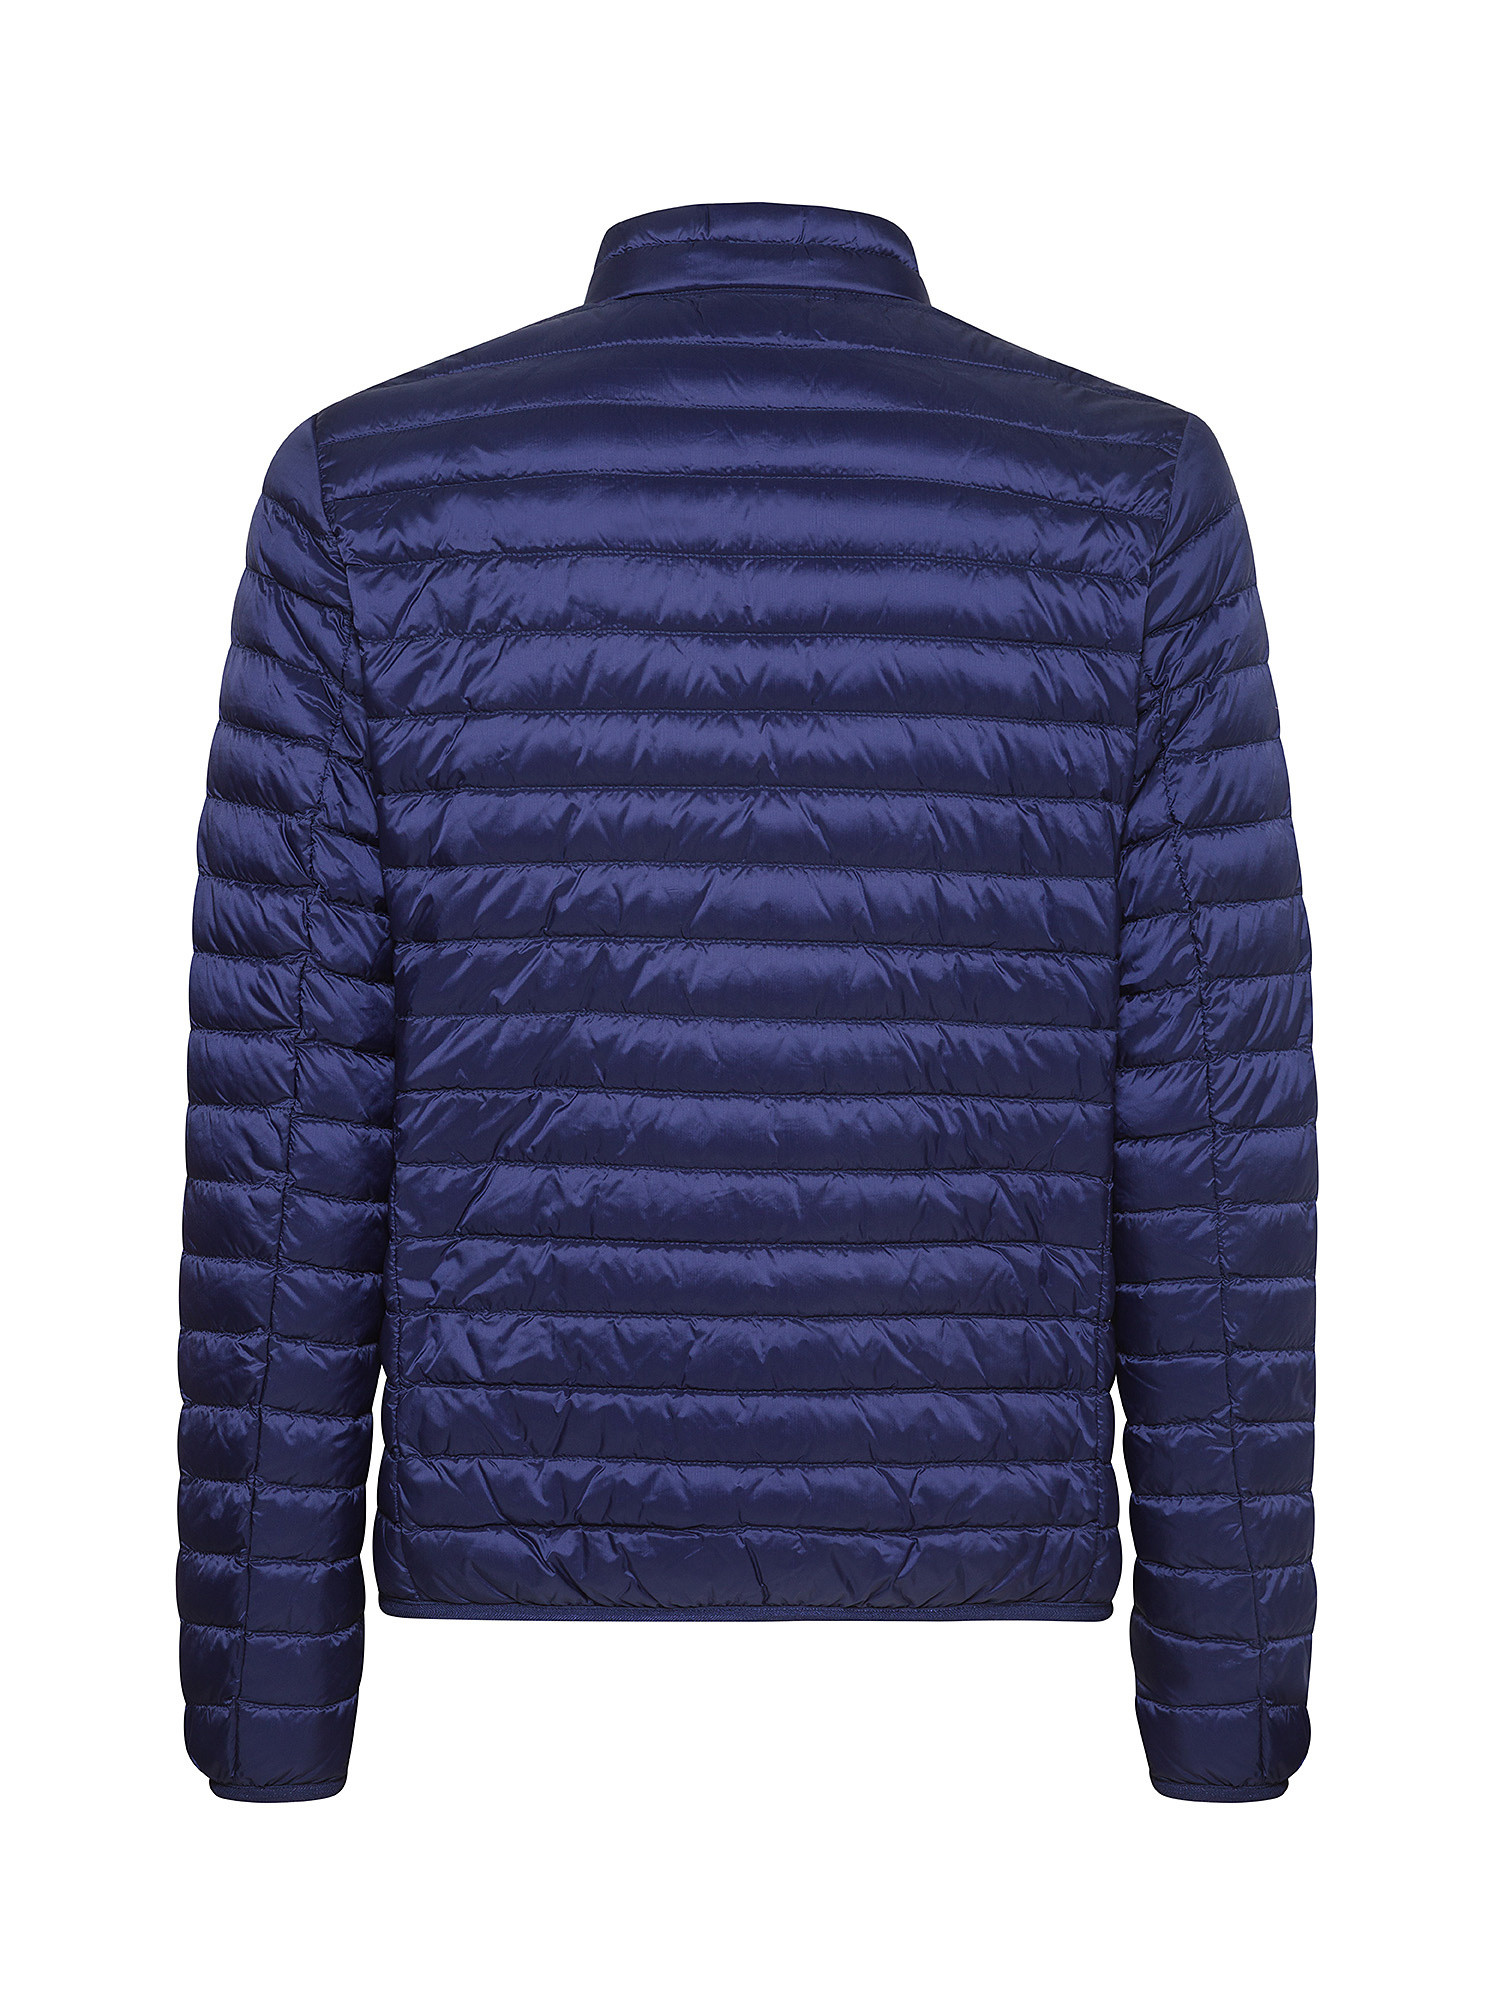 Ciesse Piumini - Jason down jacket in nylon, Blue, large image number 1